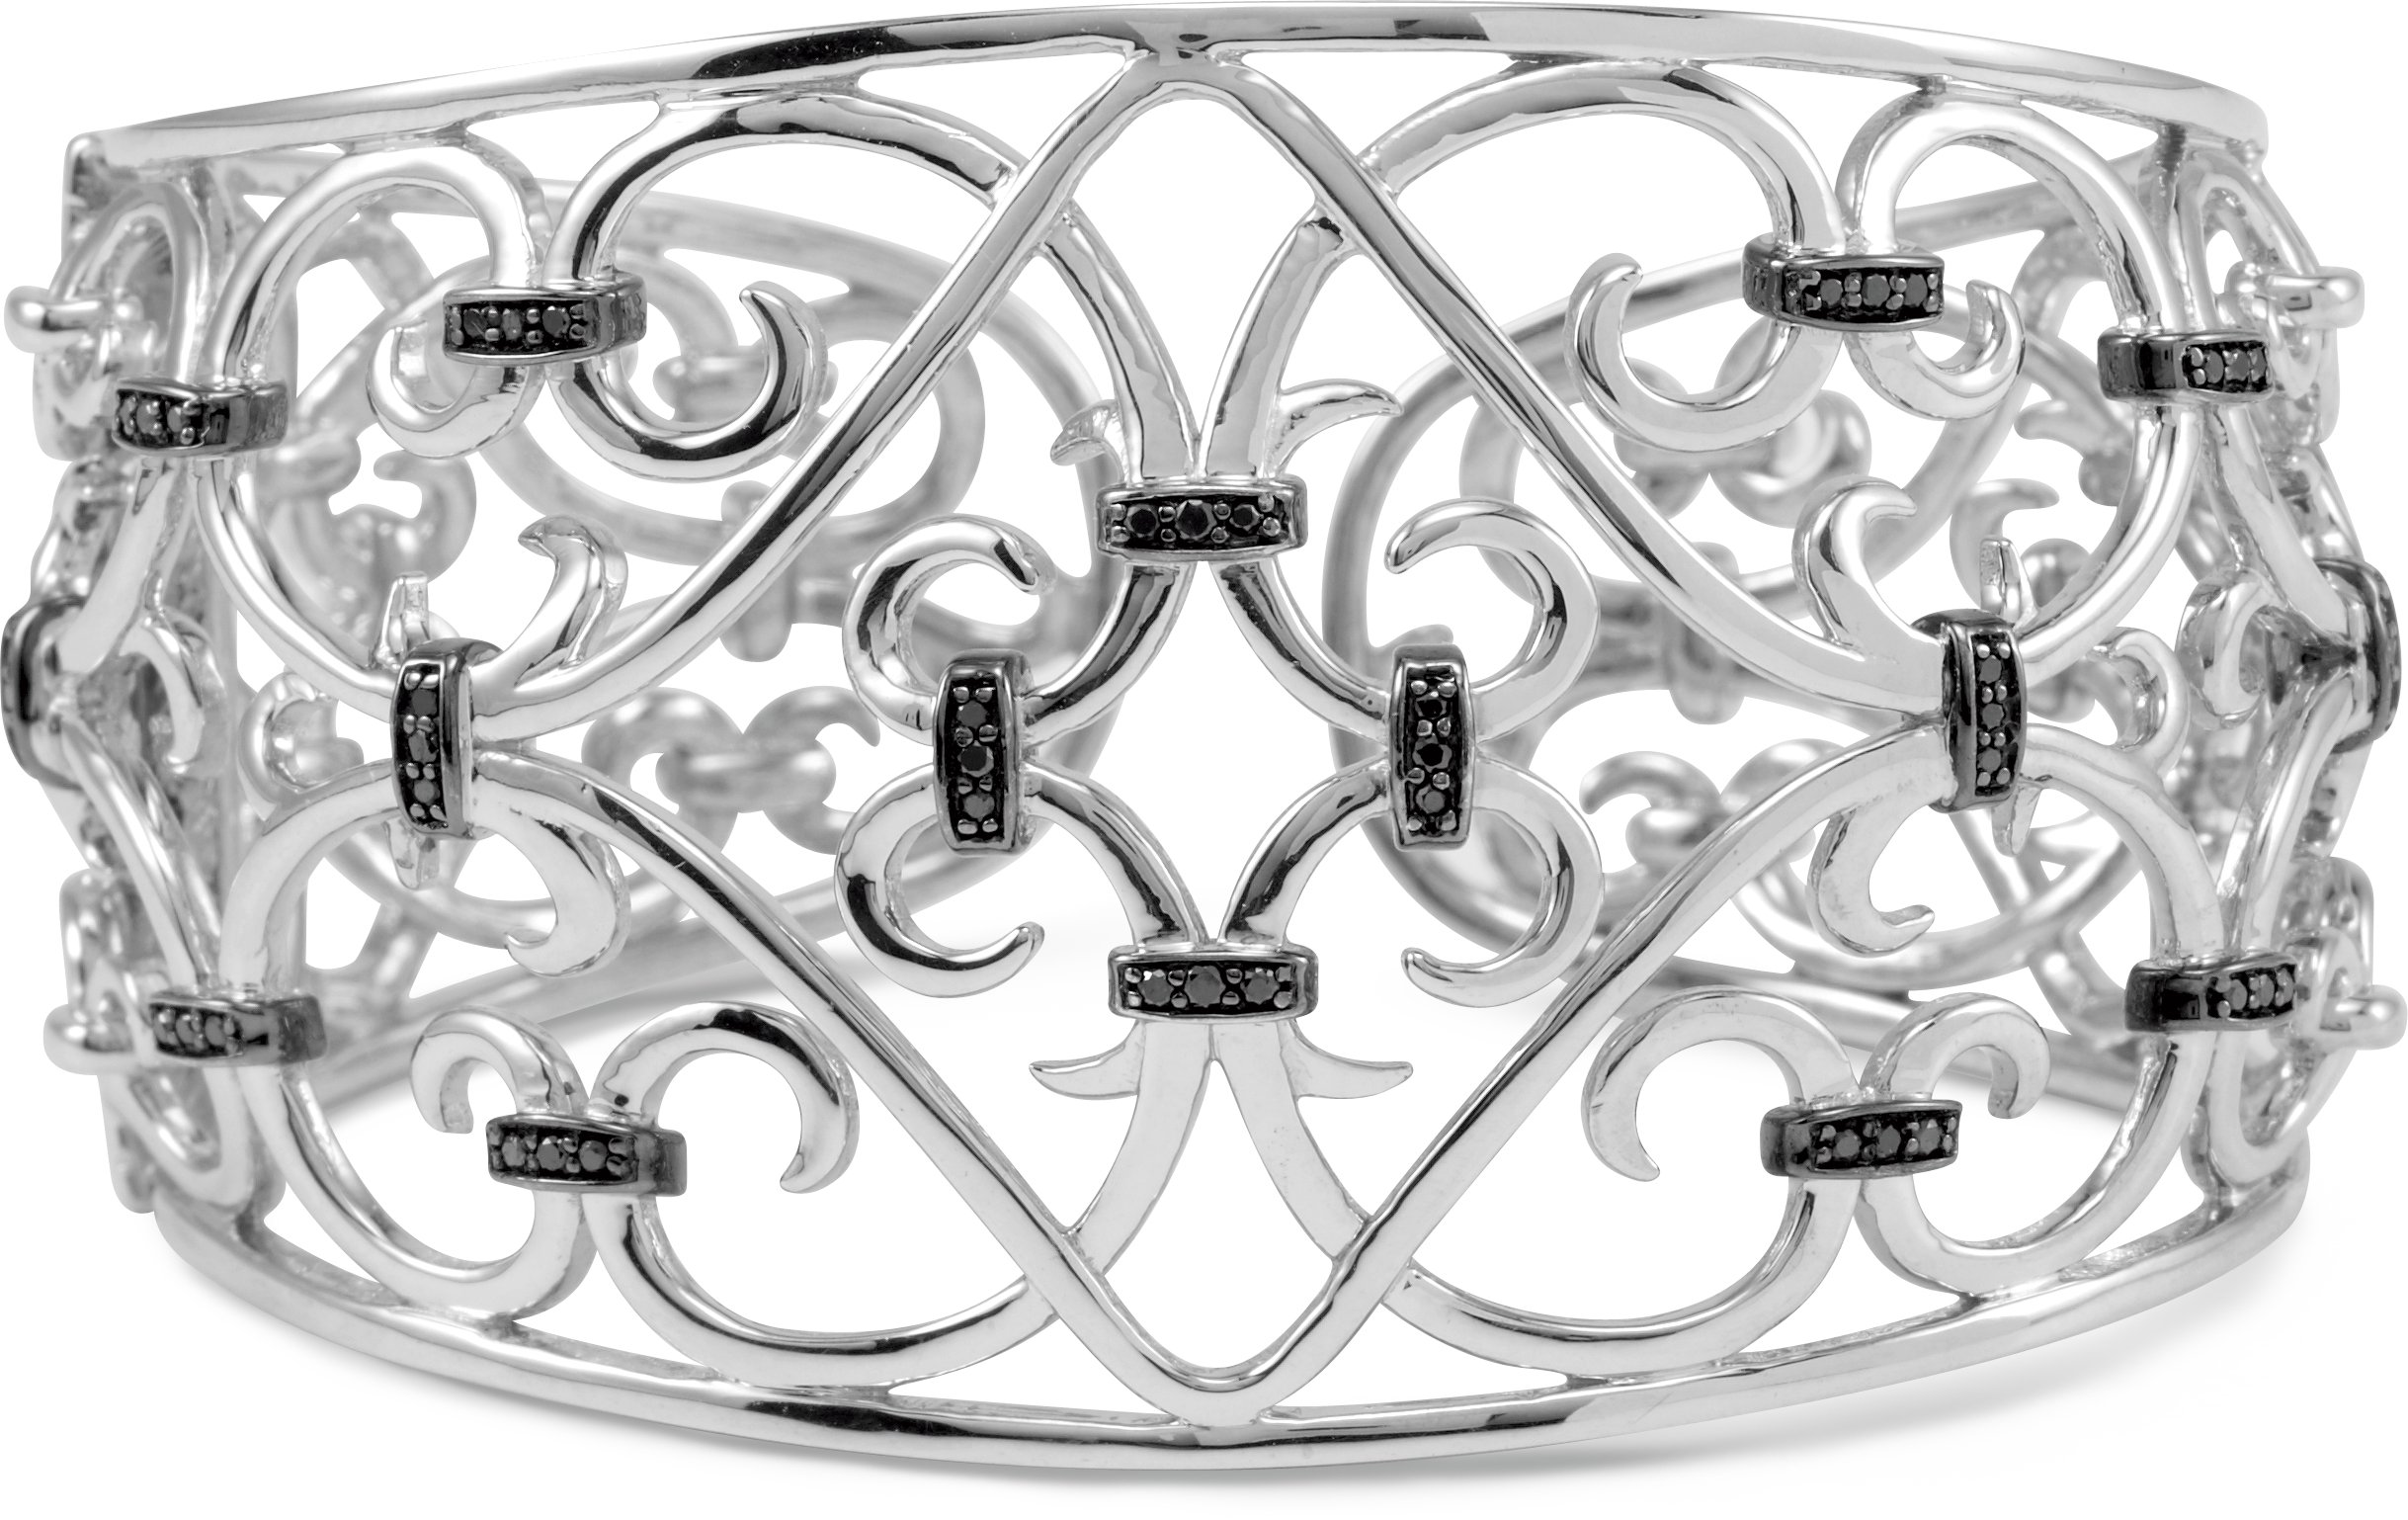 Black/White Rhodium-Plated Sterling Silver 1/3 CTW Natural Black Diamond Cuff Bracelet